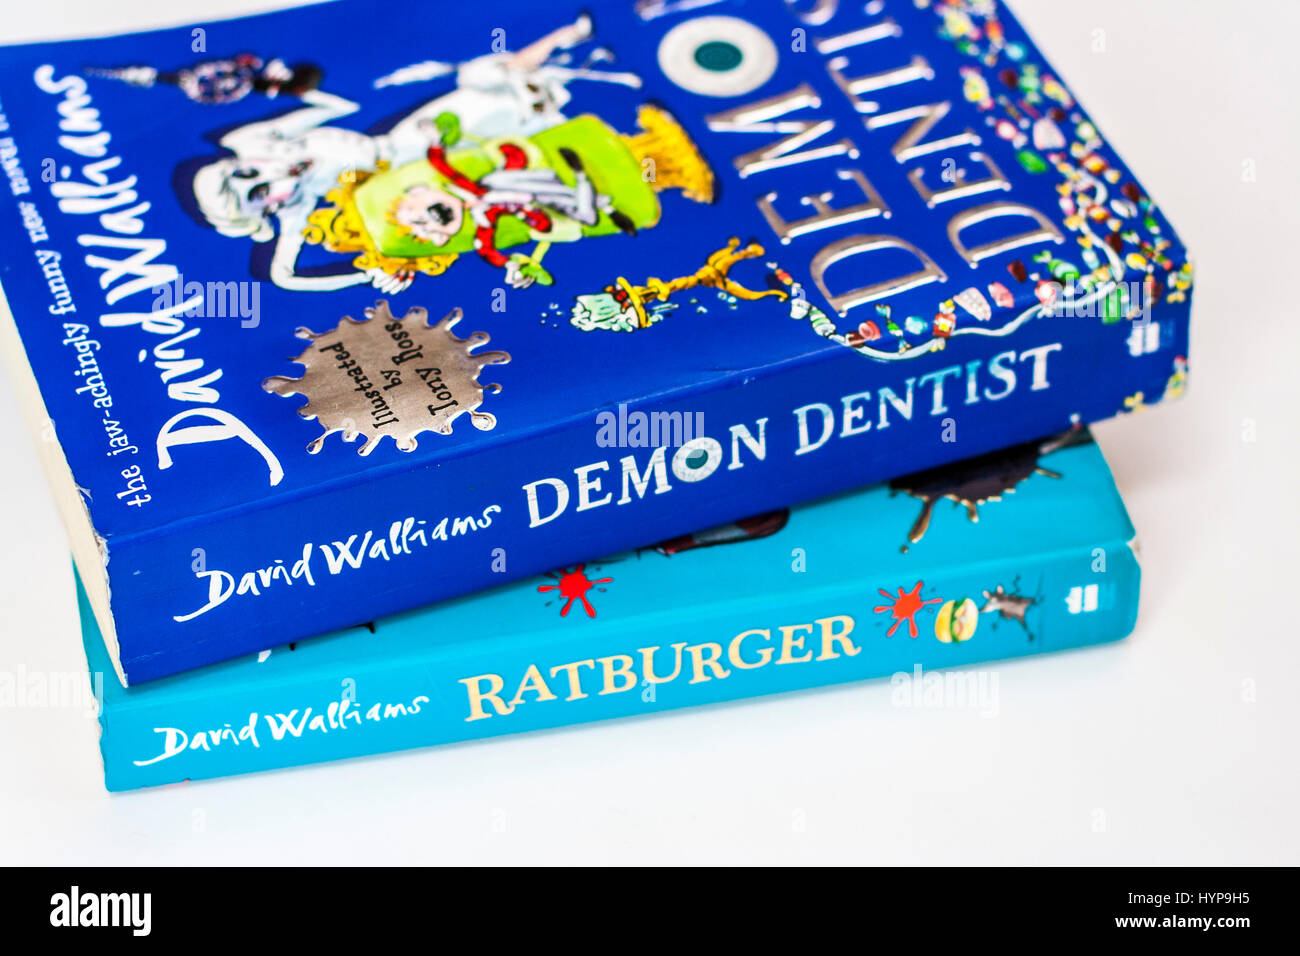 David Walliams book covers- Demon Dentist & Ratburger, childrens books, kids books,  reading concept, childhood favourites Stock Photo